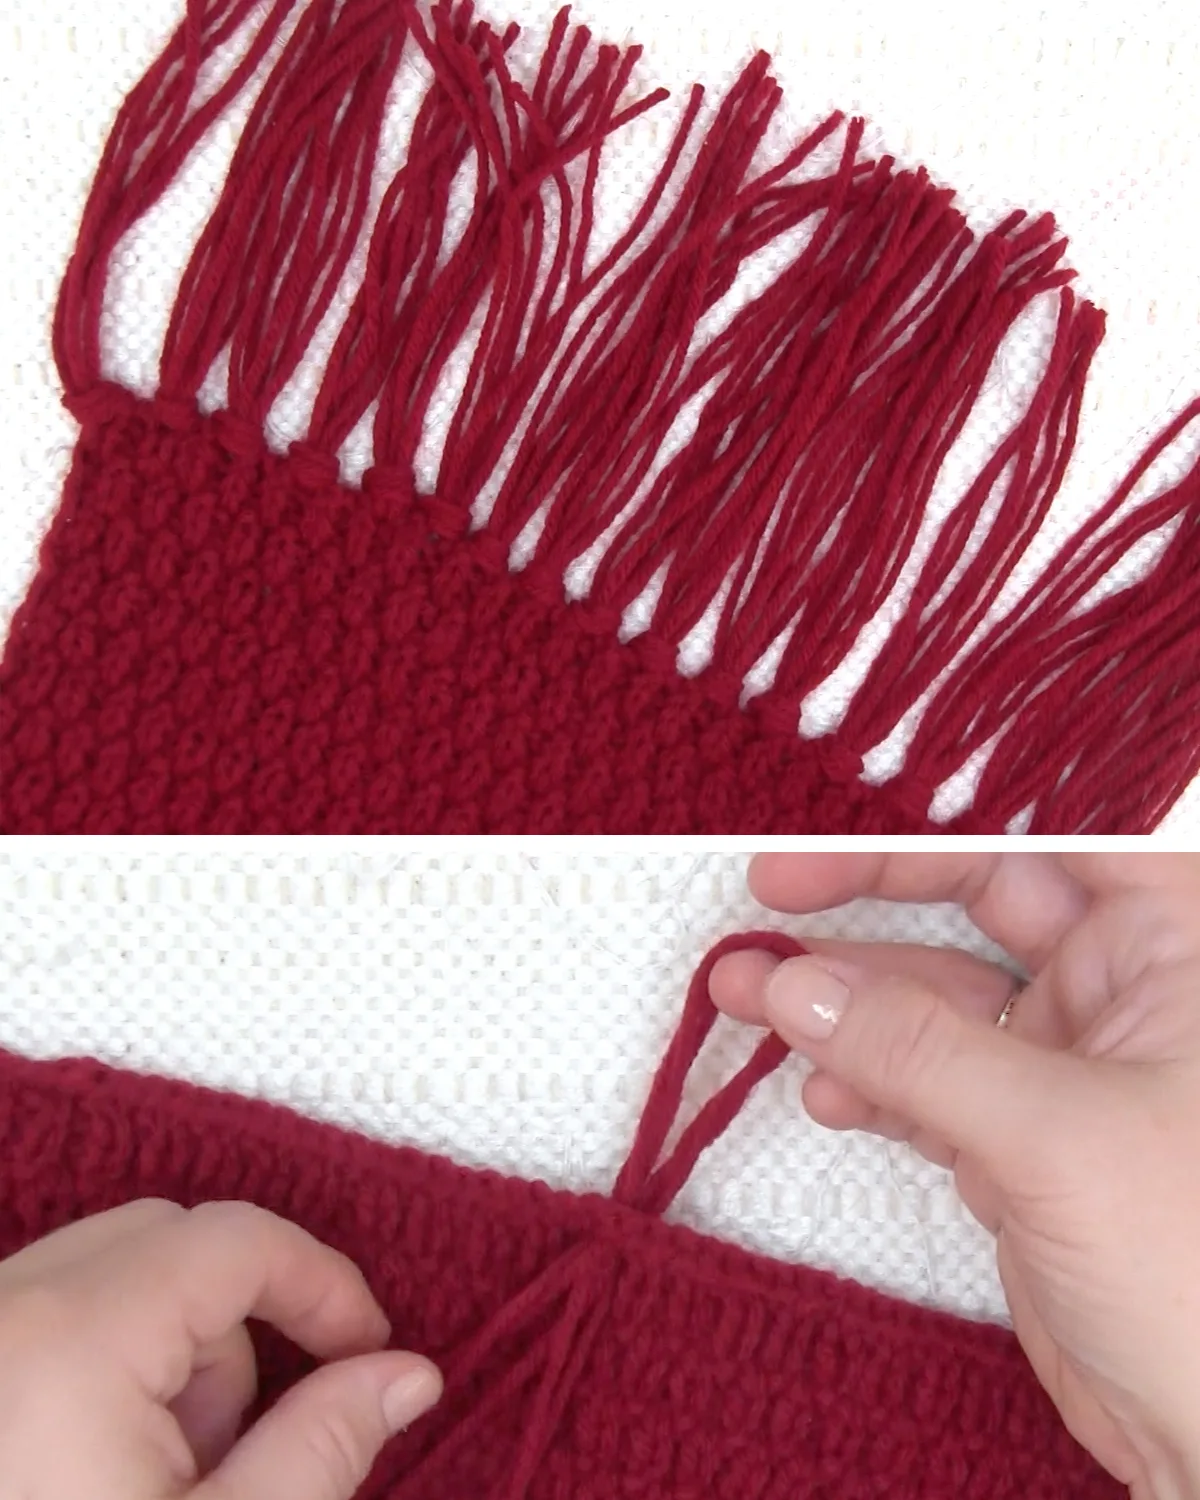 Fringe tassels in yarn on knitted scarf.